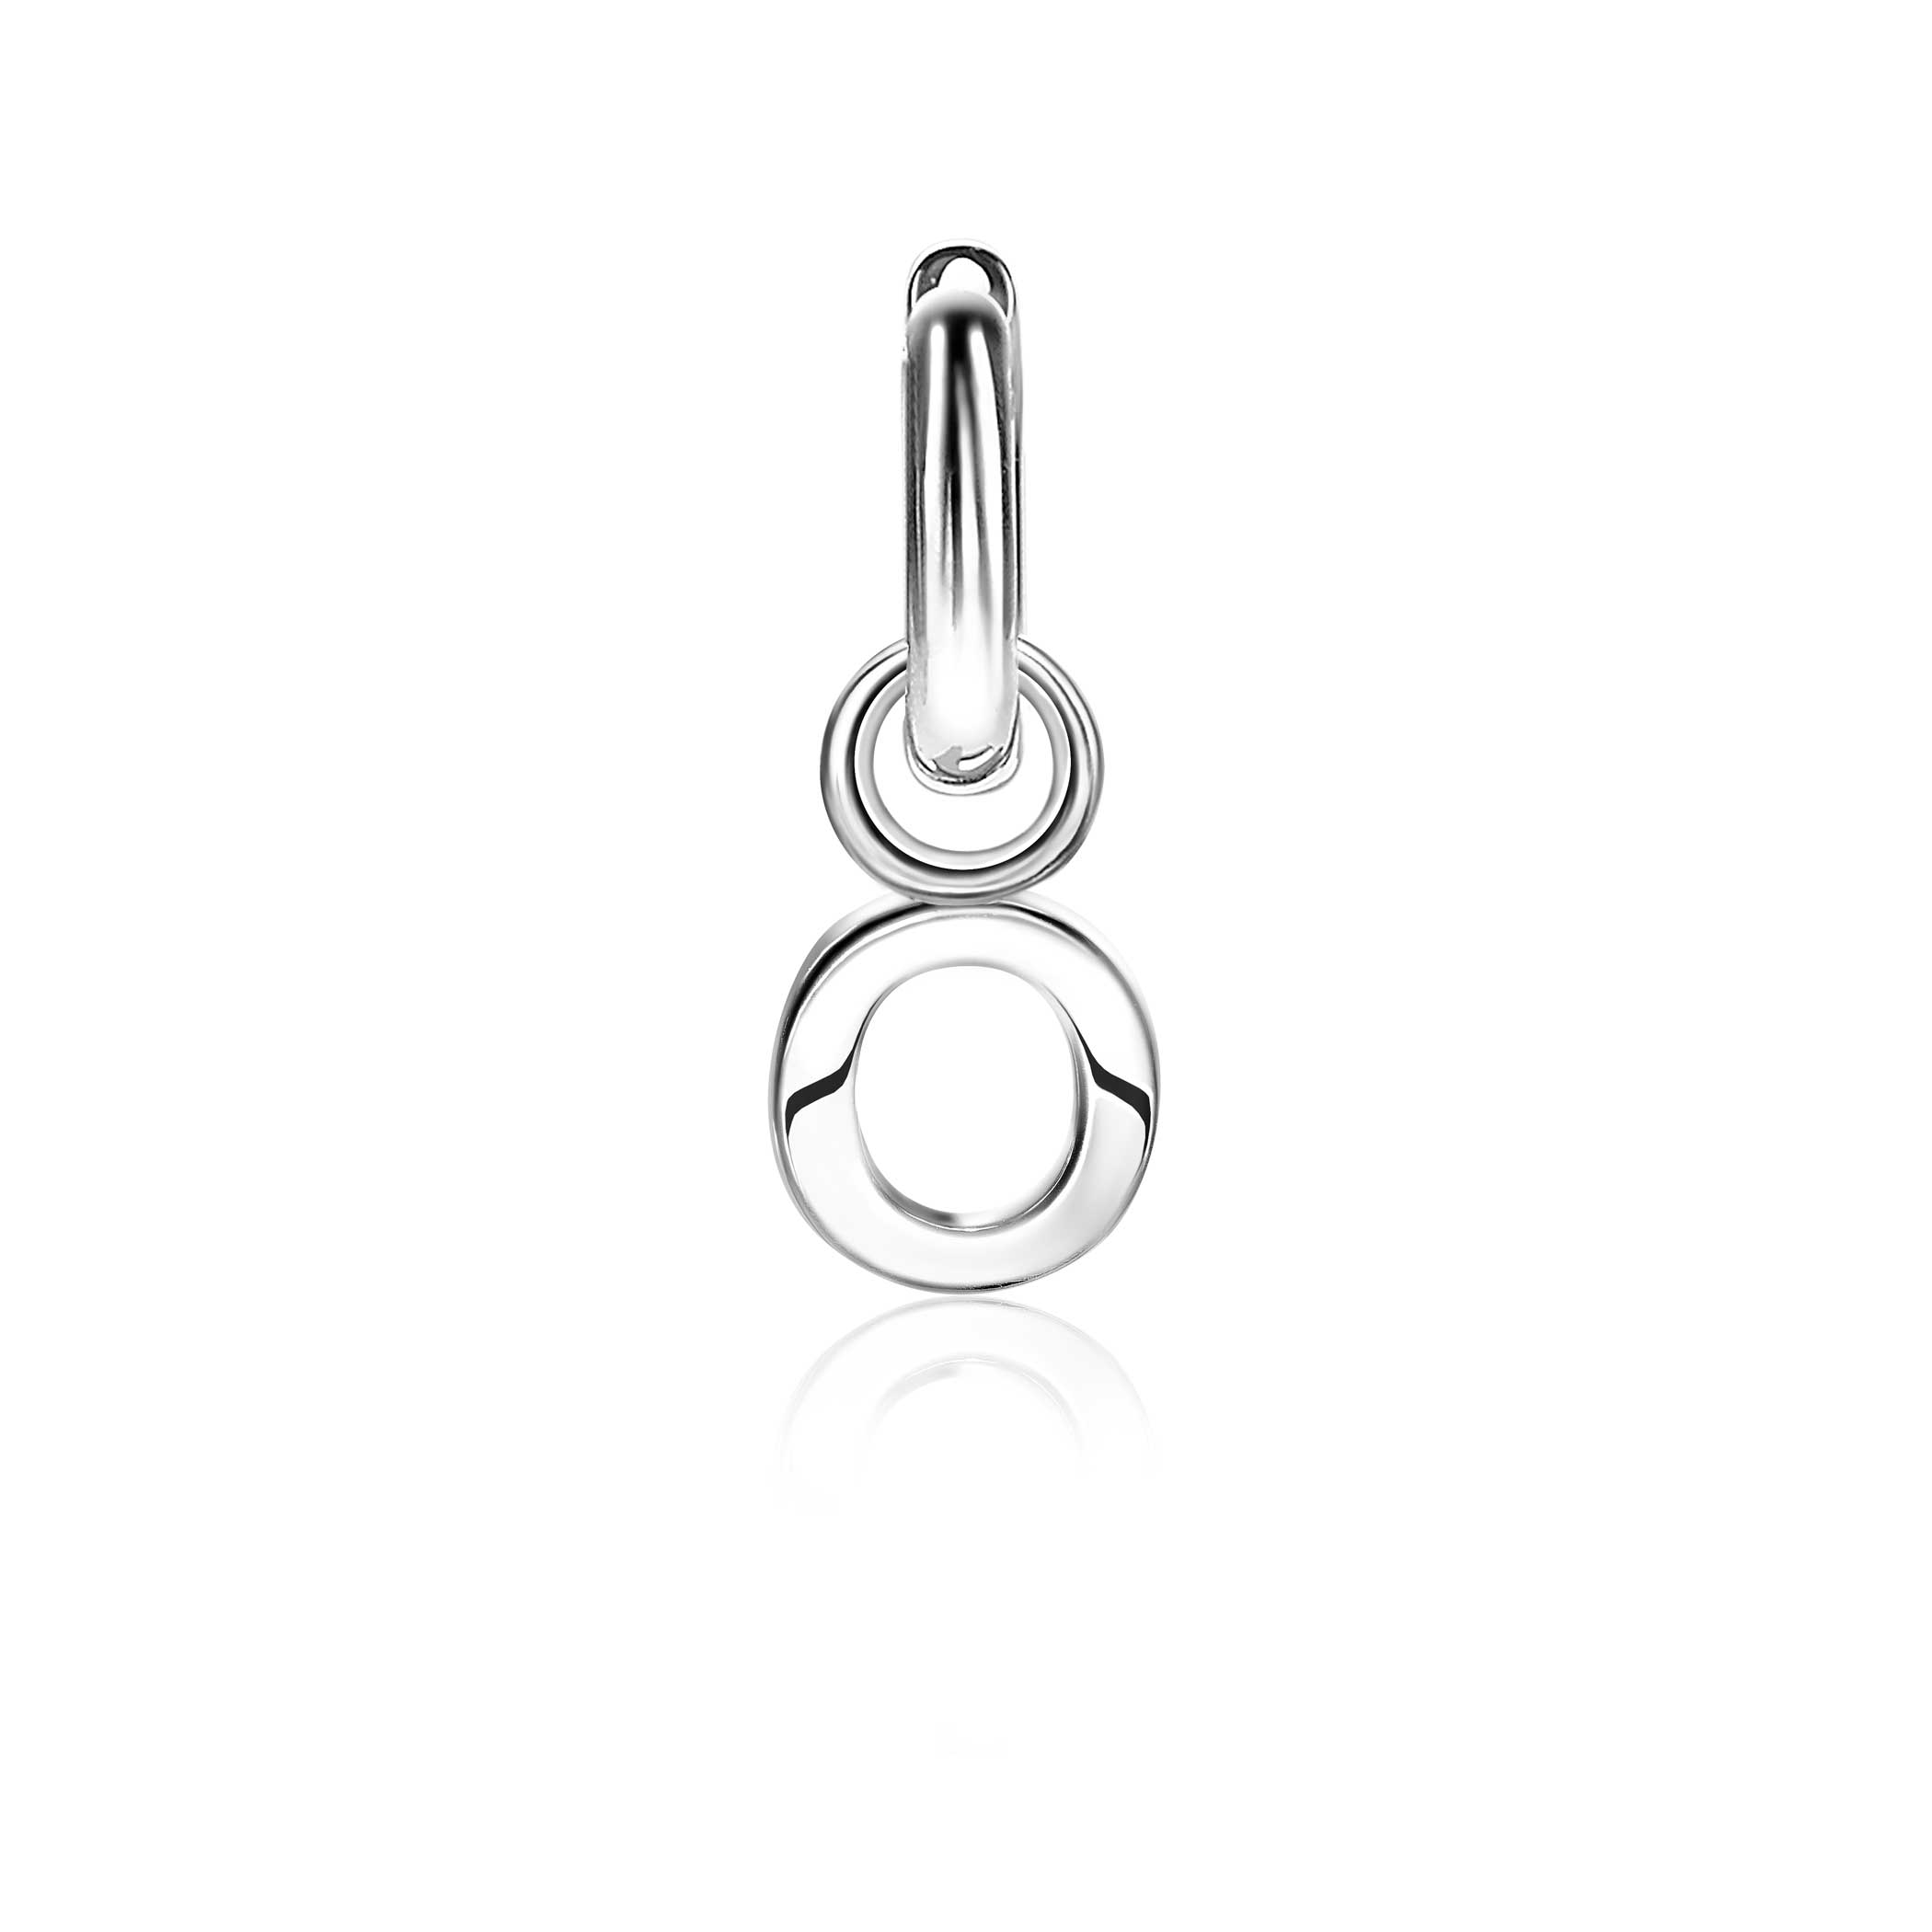 ZINZI Sterling Silver Letter Earrings Pendant O price per piece ZICH2144O (excl. hoop earrings)